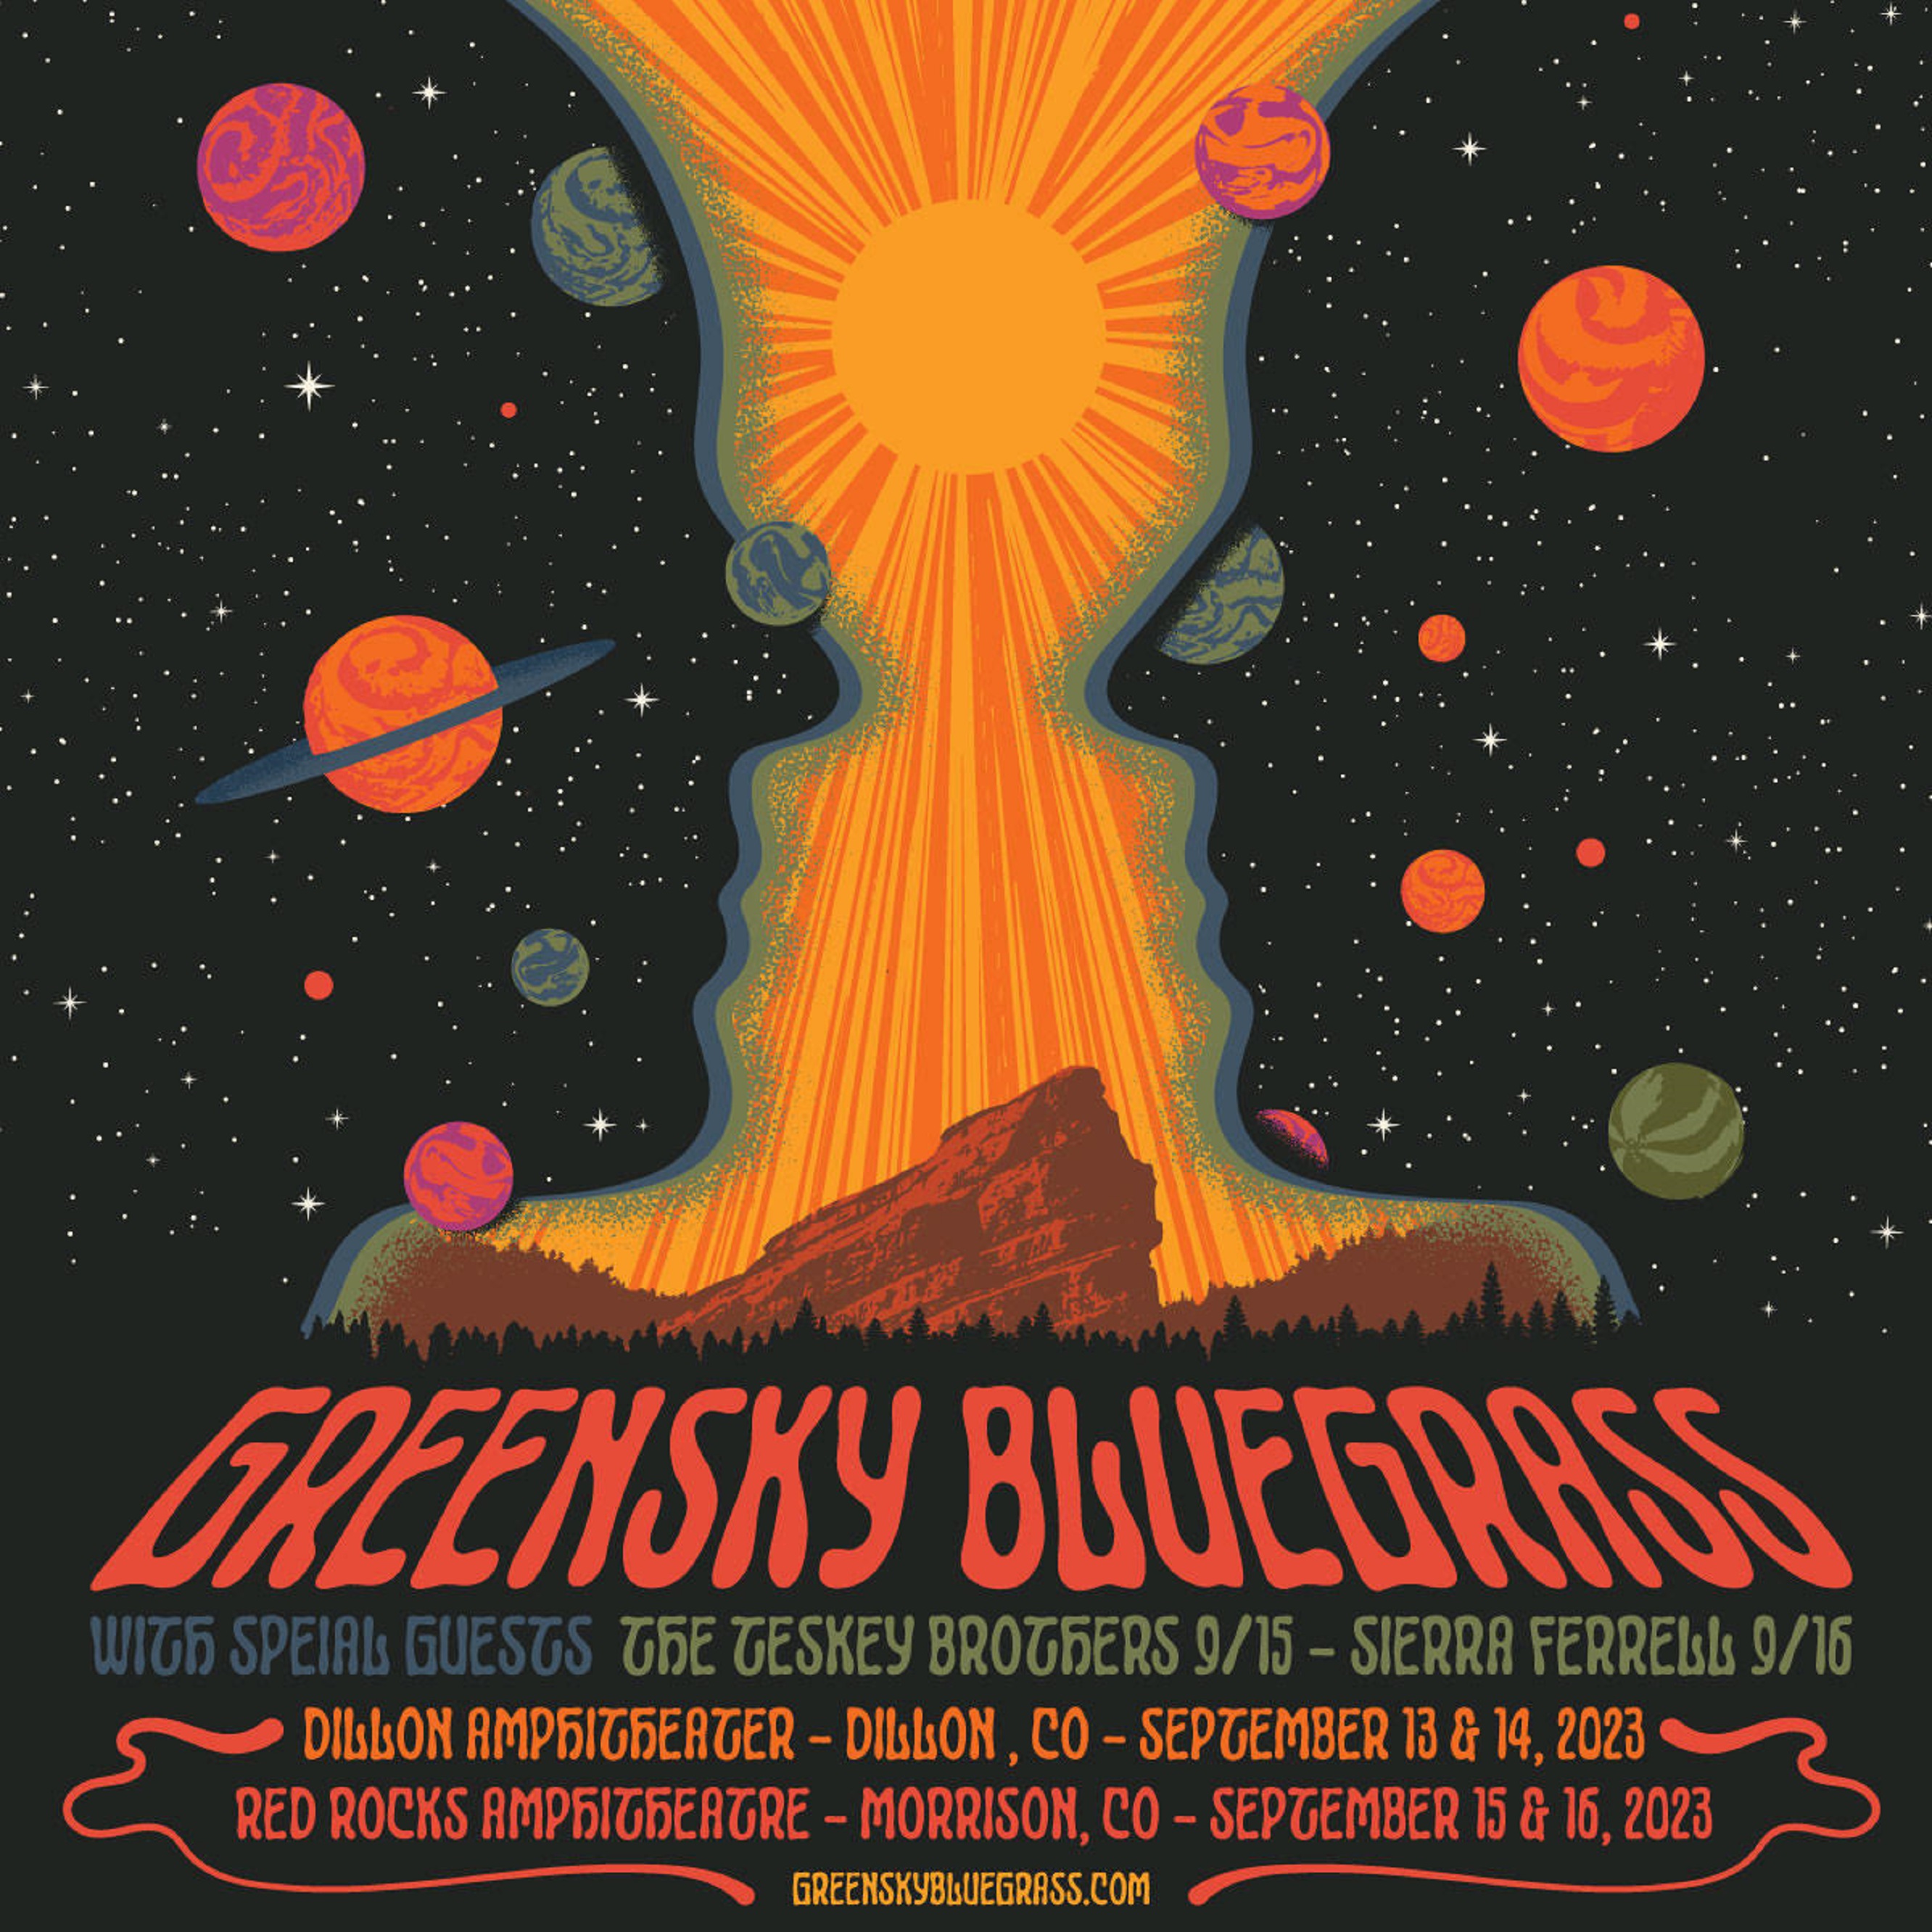 Greensky Bluegrass Announce 2023 Red Rocks & Dillon Amphitheater shows